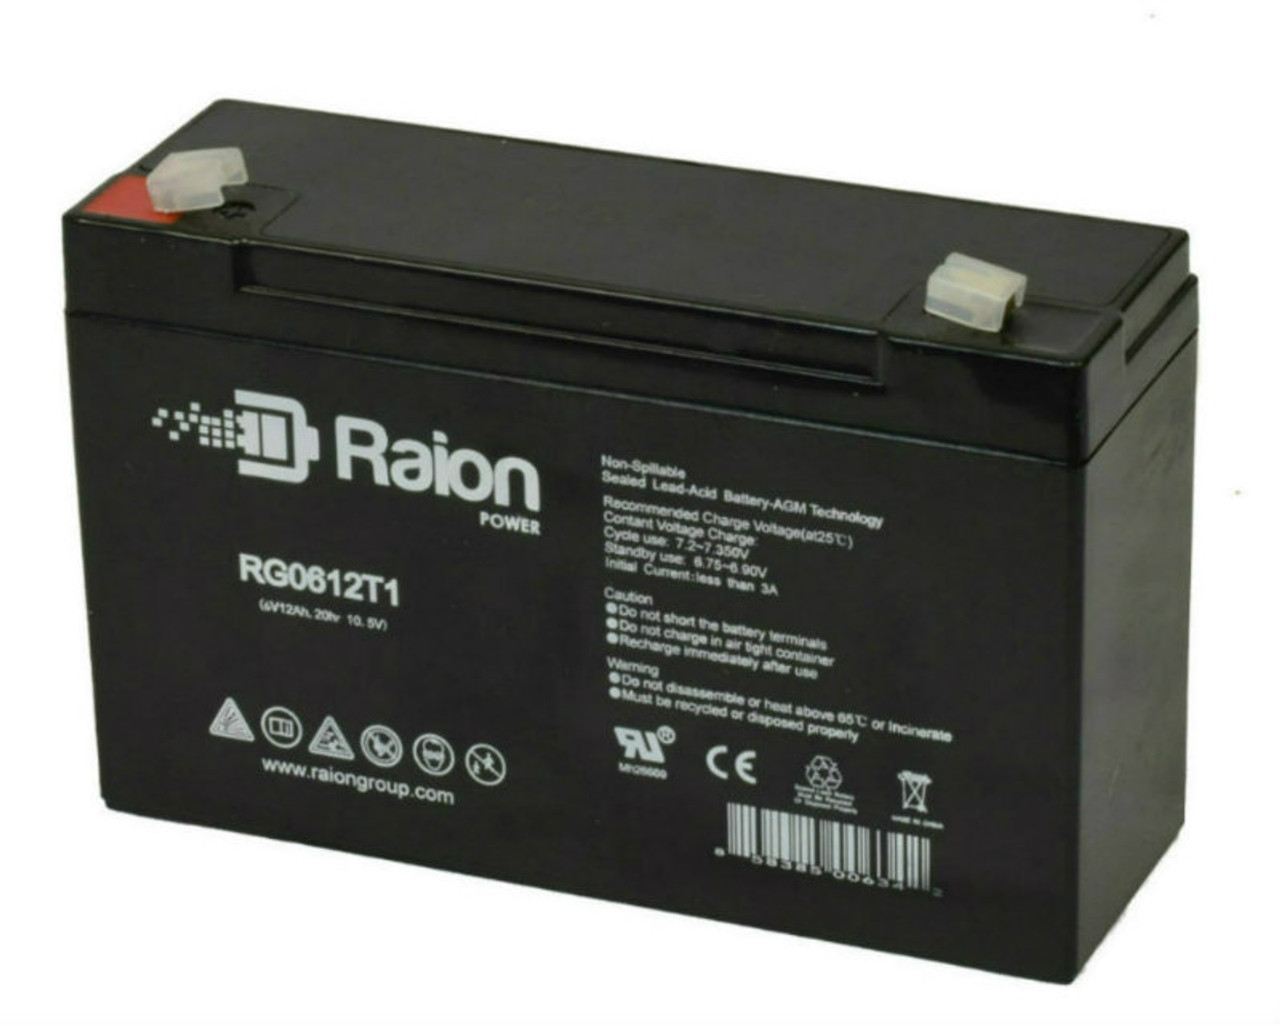 Raion Power RG06120T1 6V 12Ah Replacement UPS Battery Cartridge for Best Power Fortress LI 1800 BAT-0063